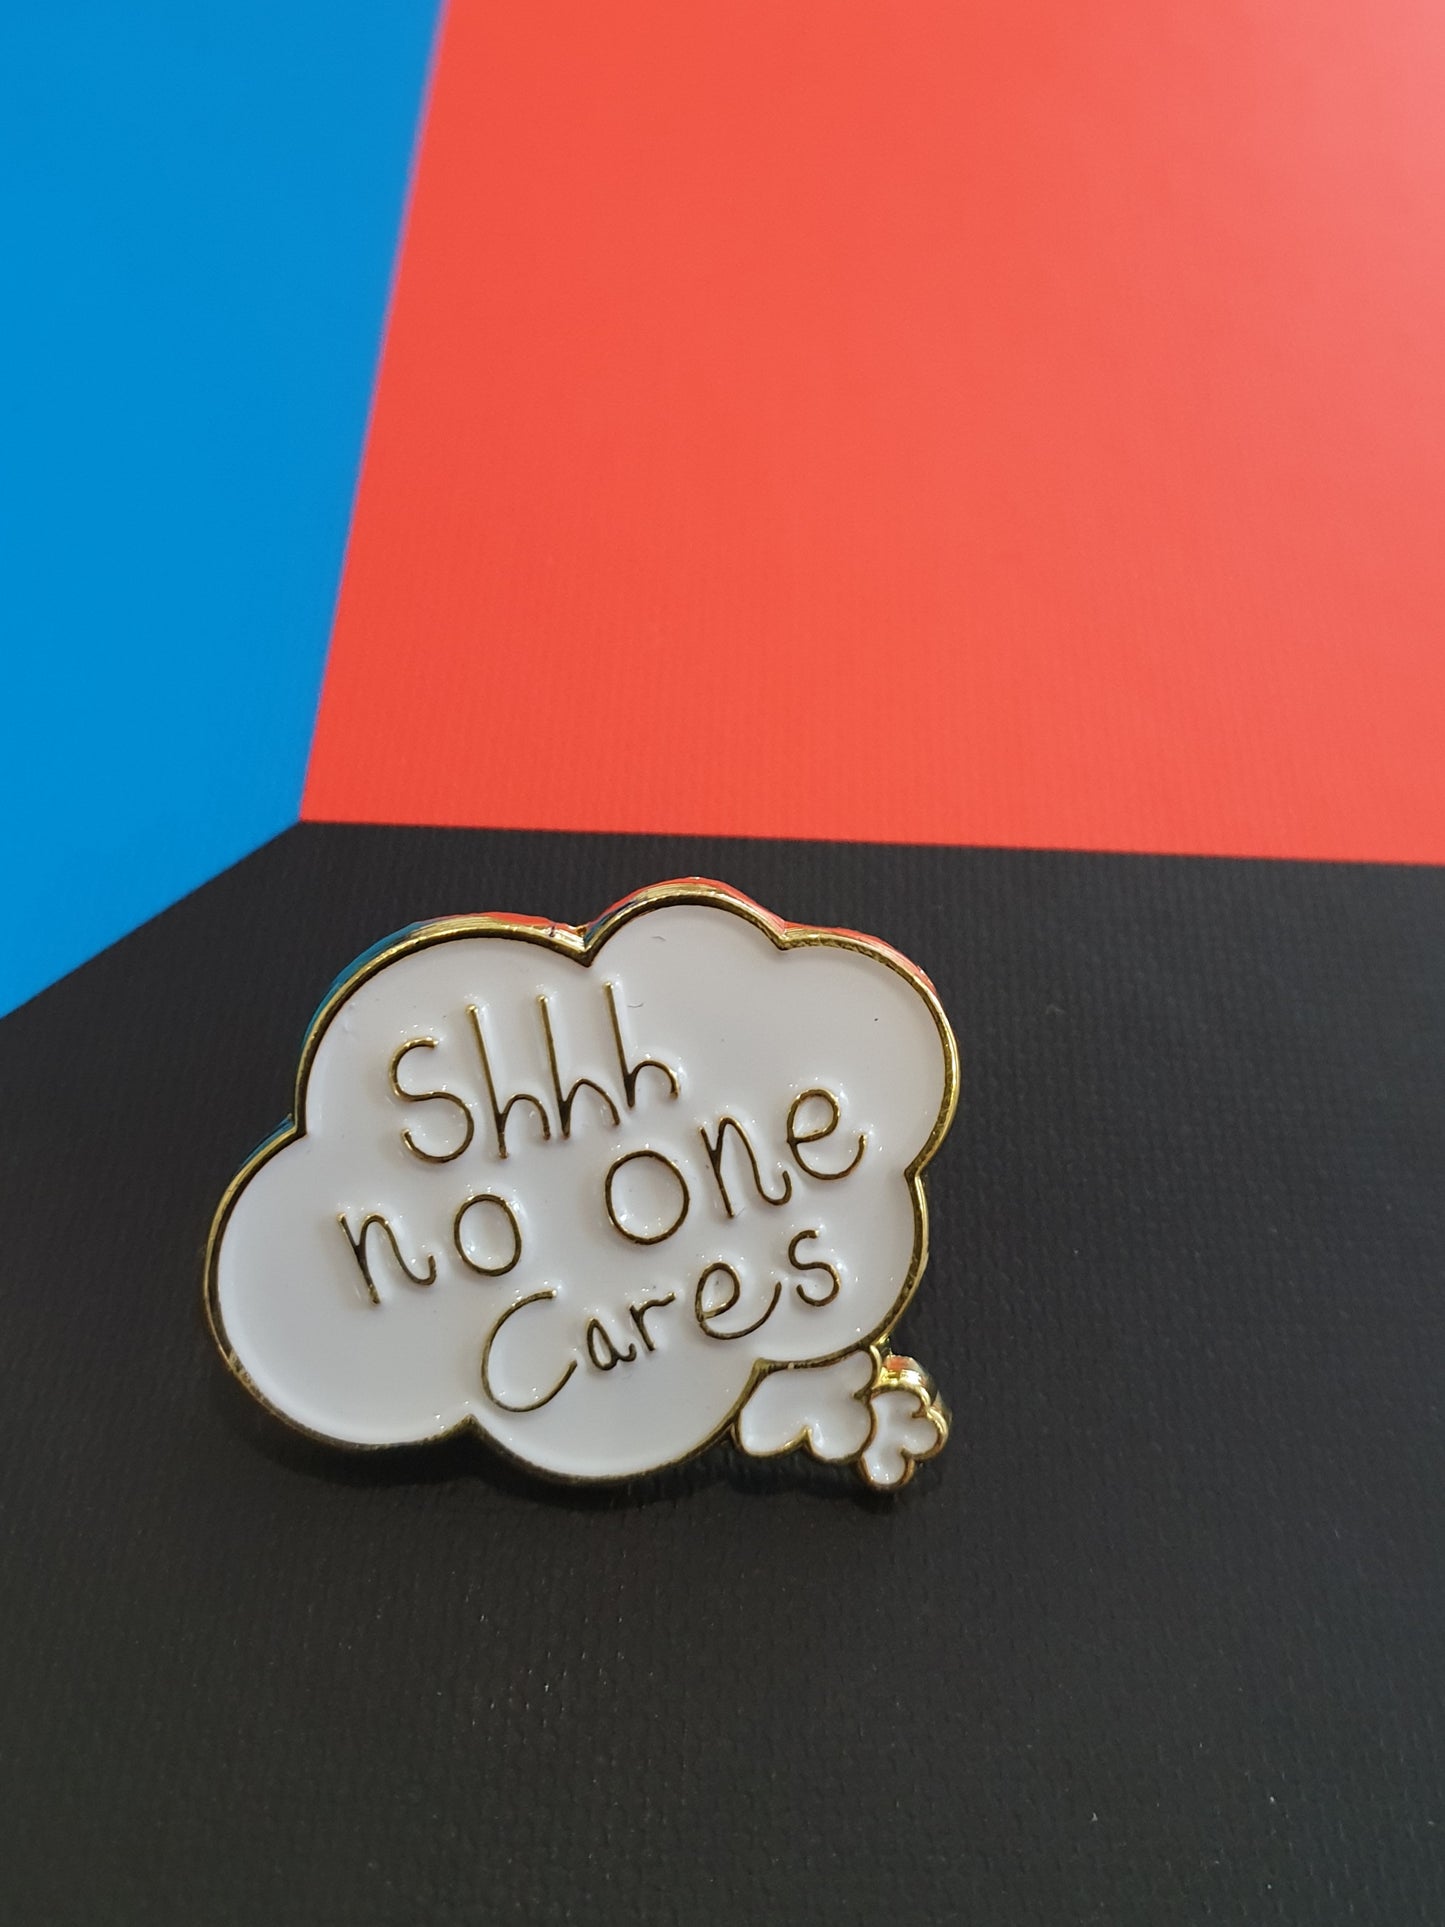 Shh No One Cares Pin